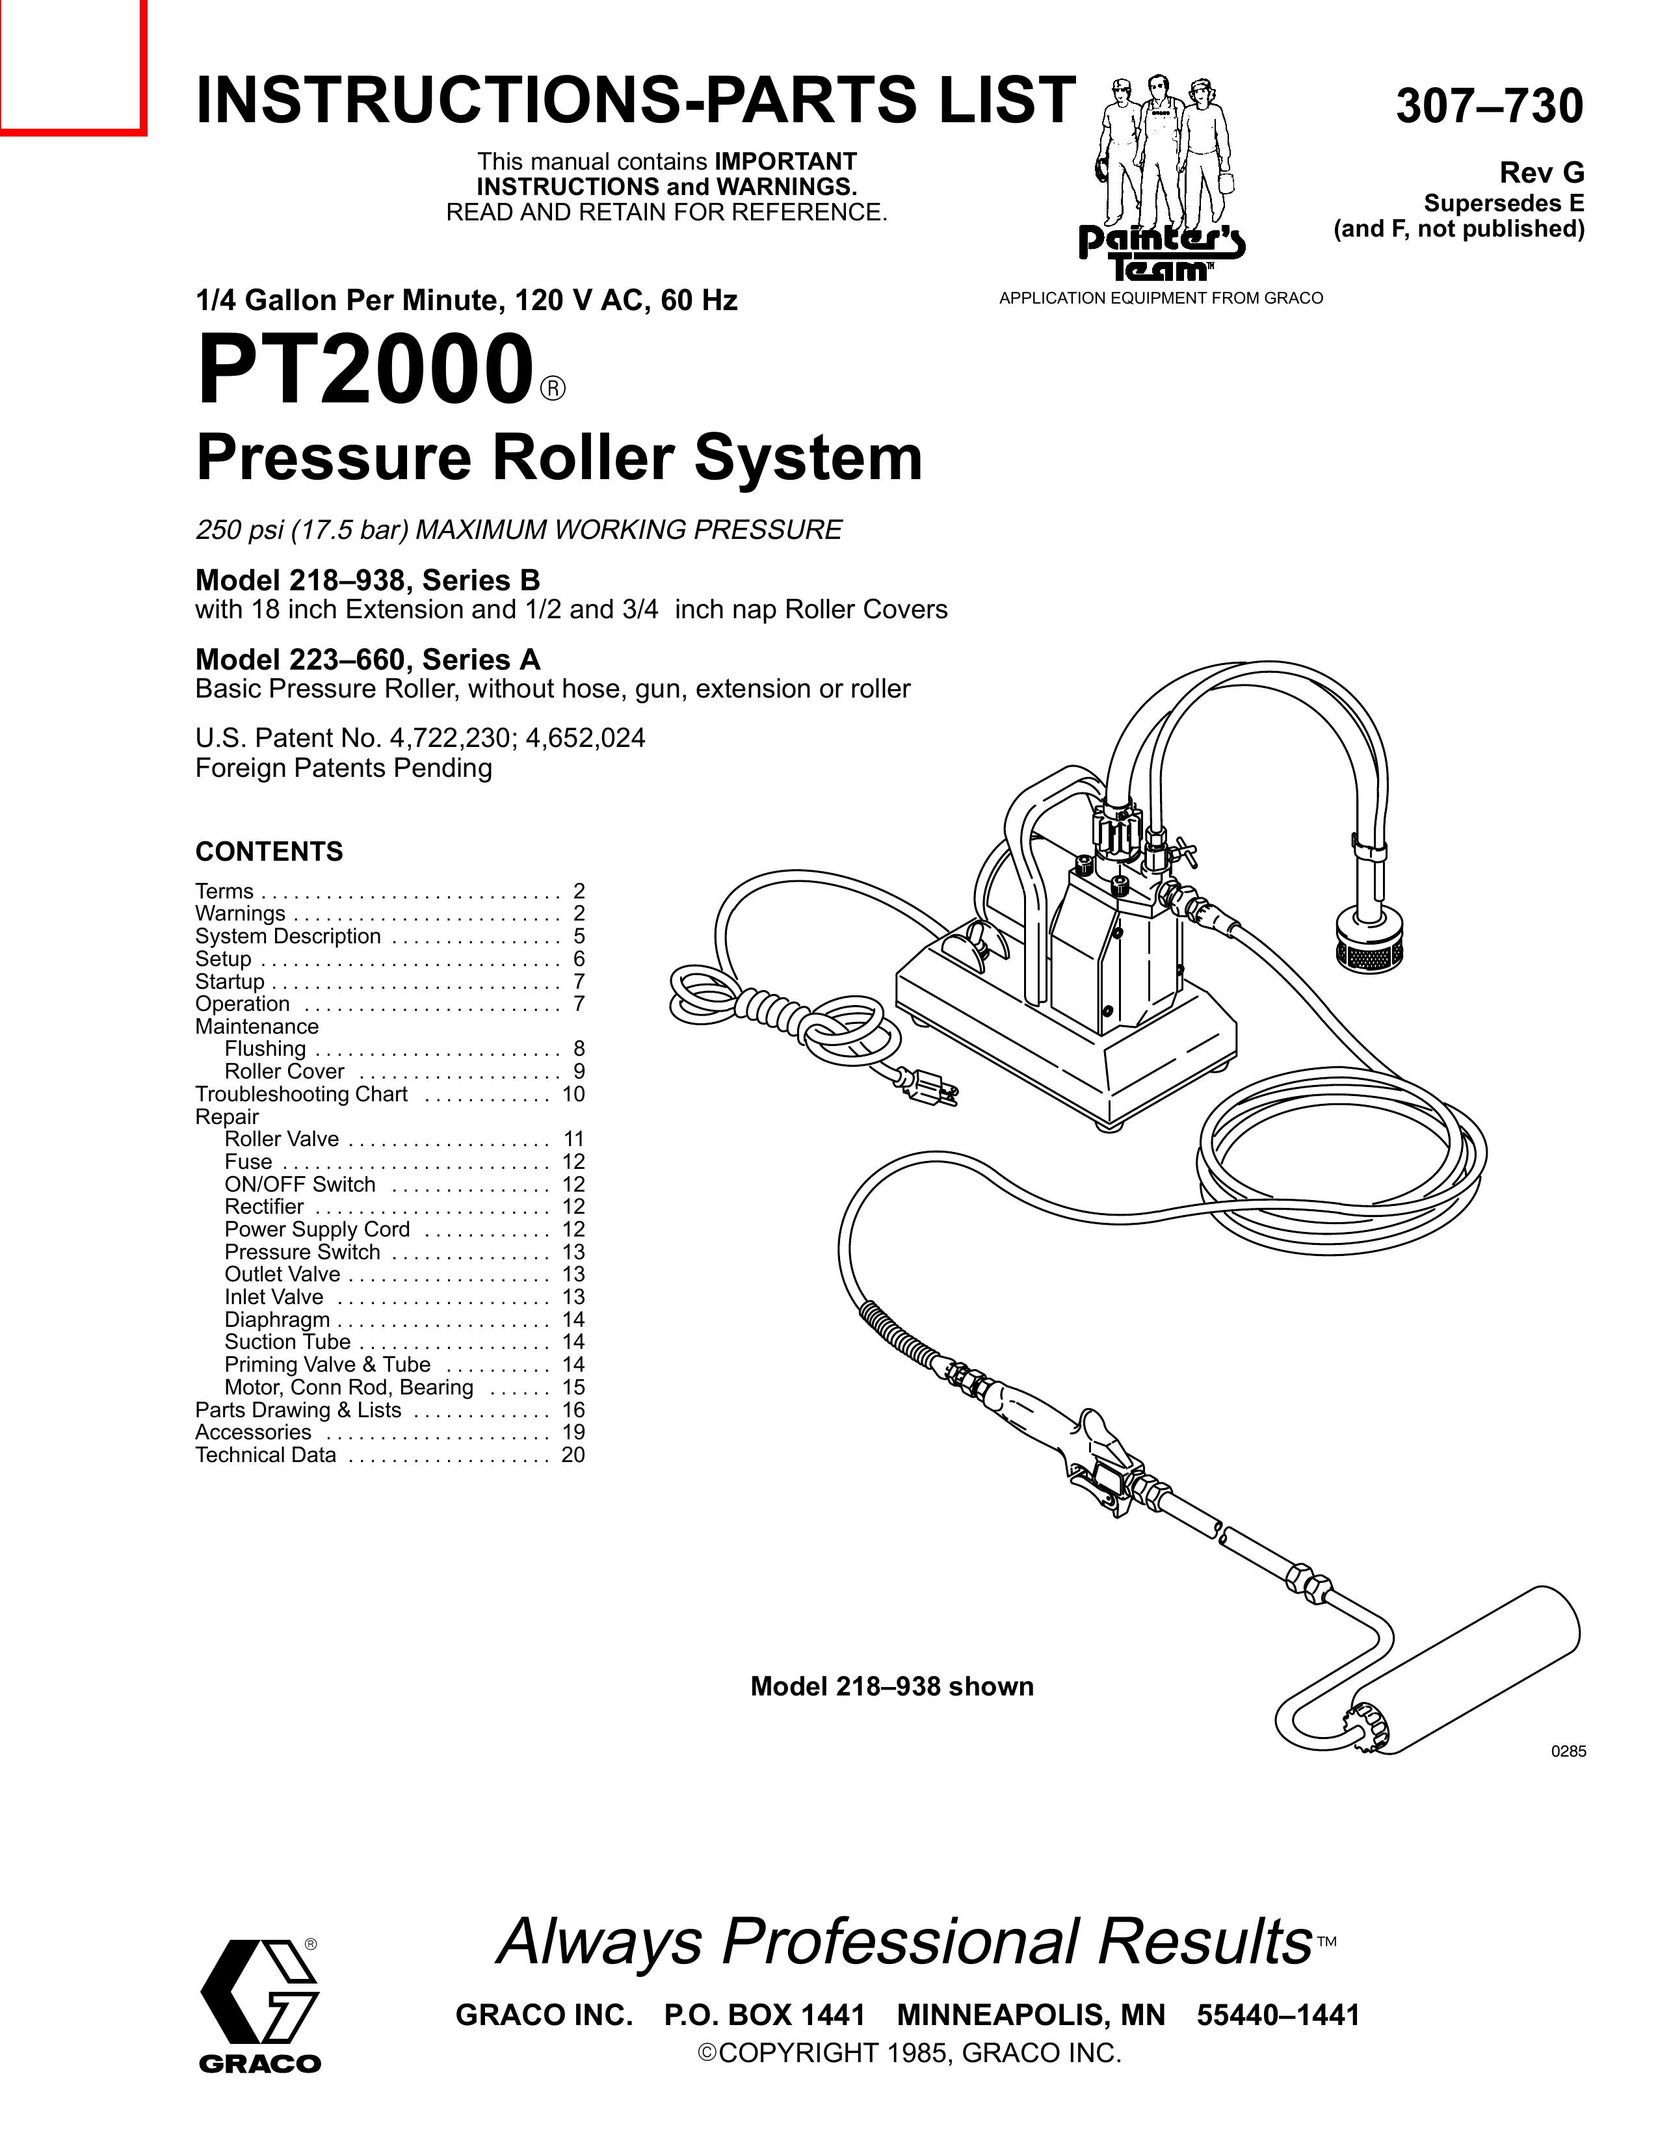 Graco Inc. 307-730 Power Roller User Manual